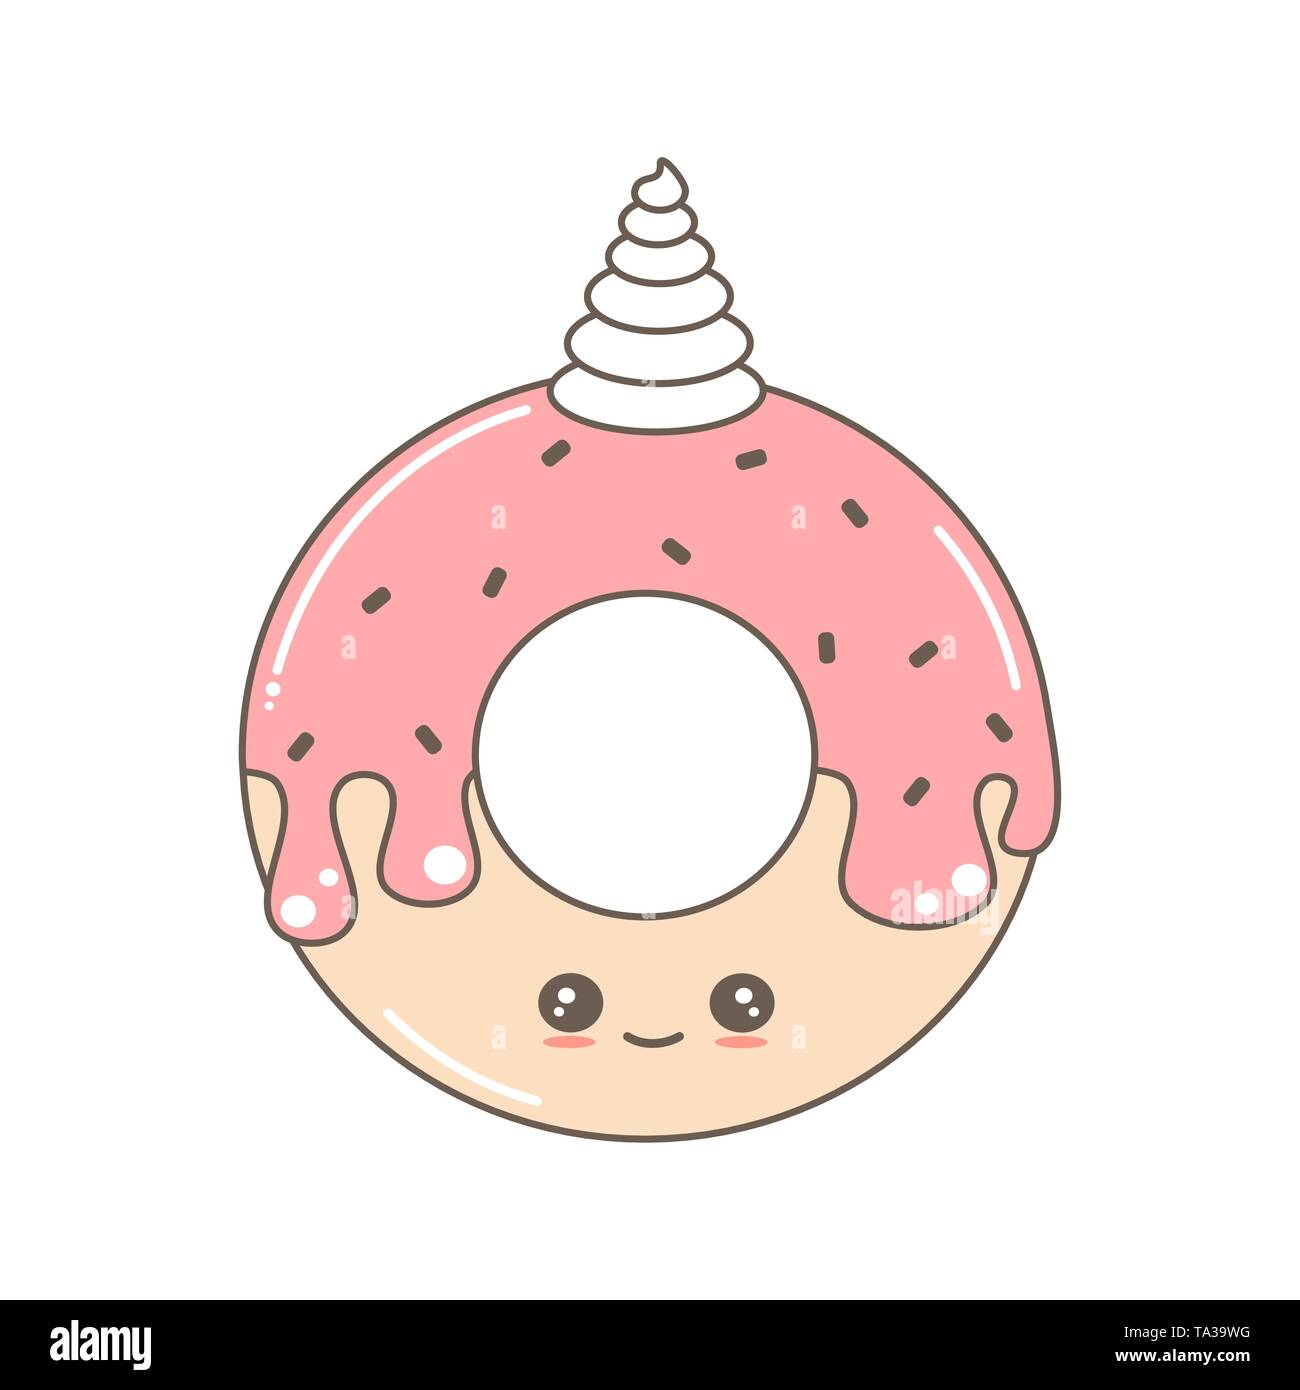 cute cartoon donut unicorn vector illustration isolated on white background Stock Vector